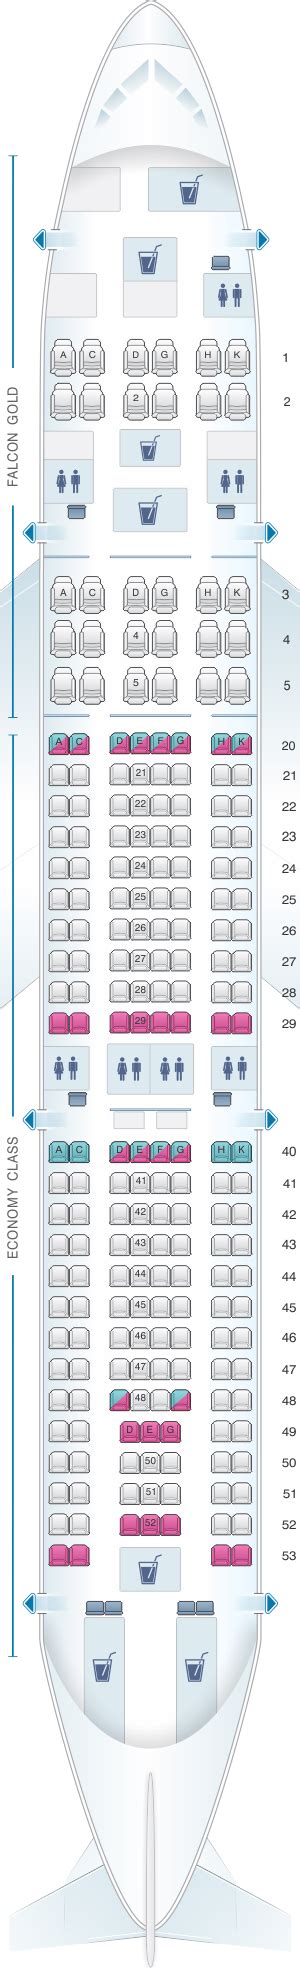 Plan De Cabine Gulf Air Airbus A330 200 B Seatmaestrofr